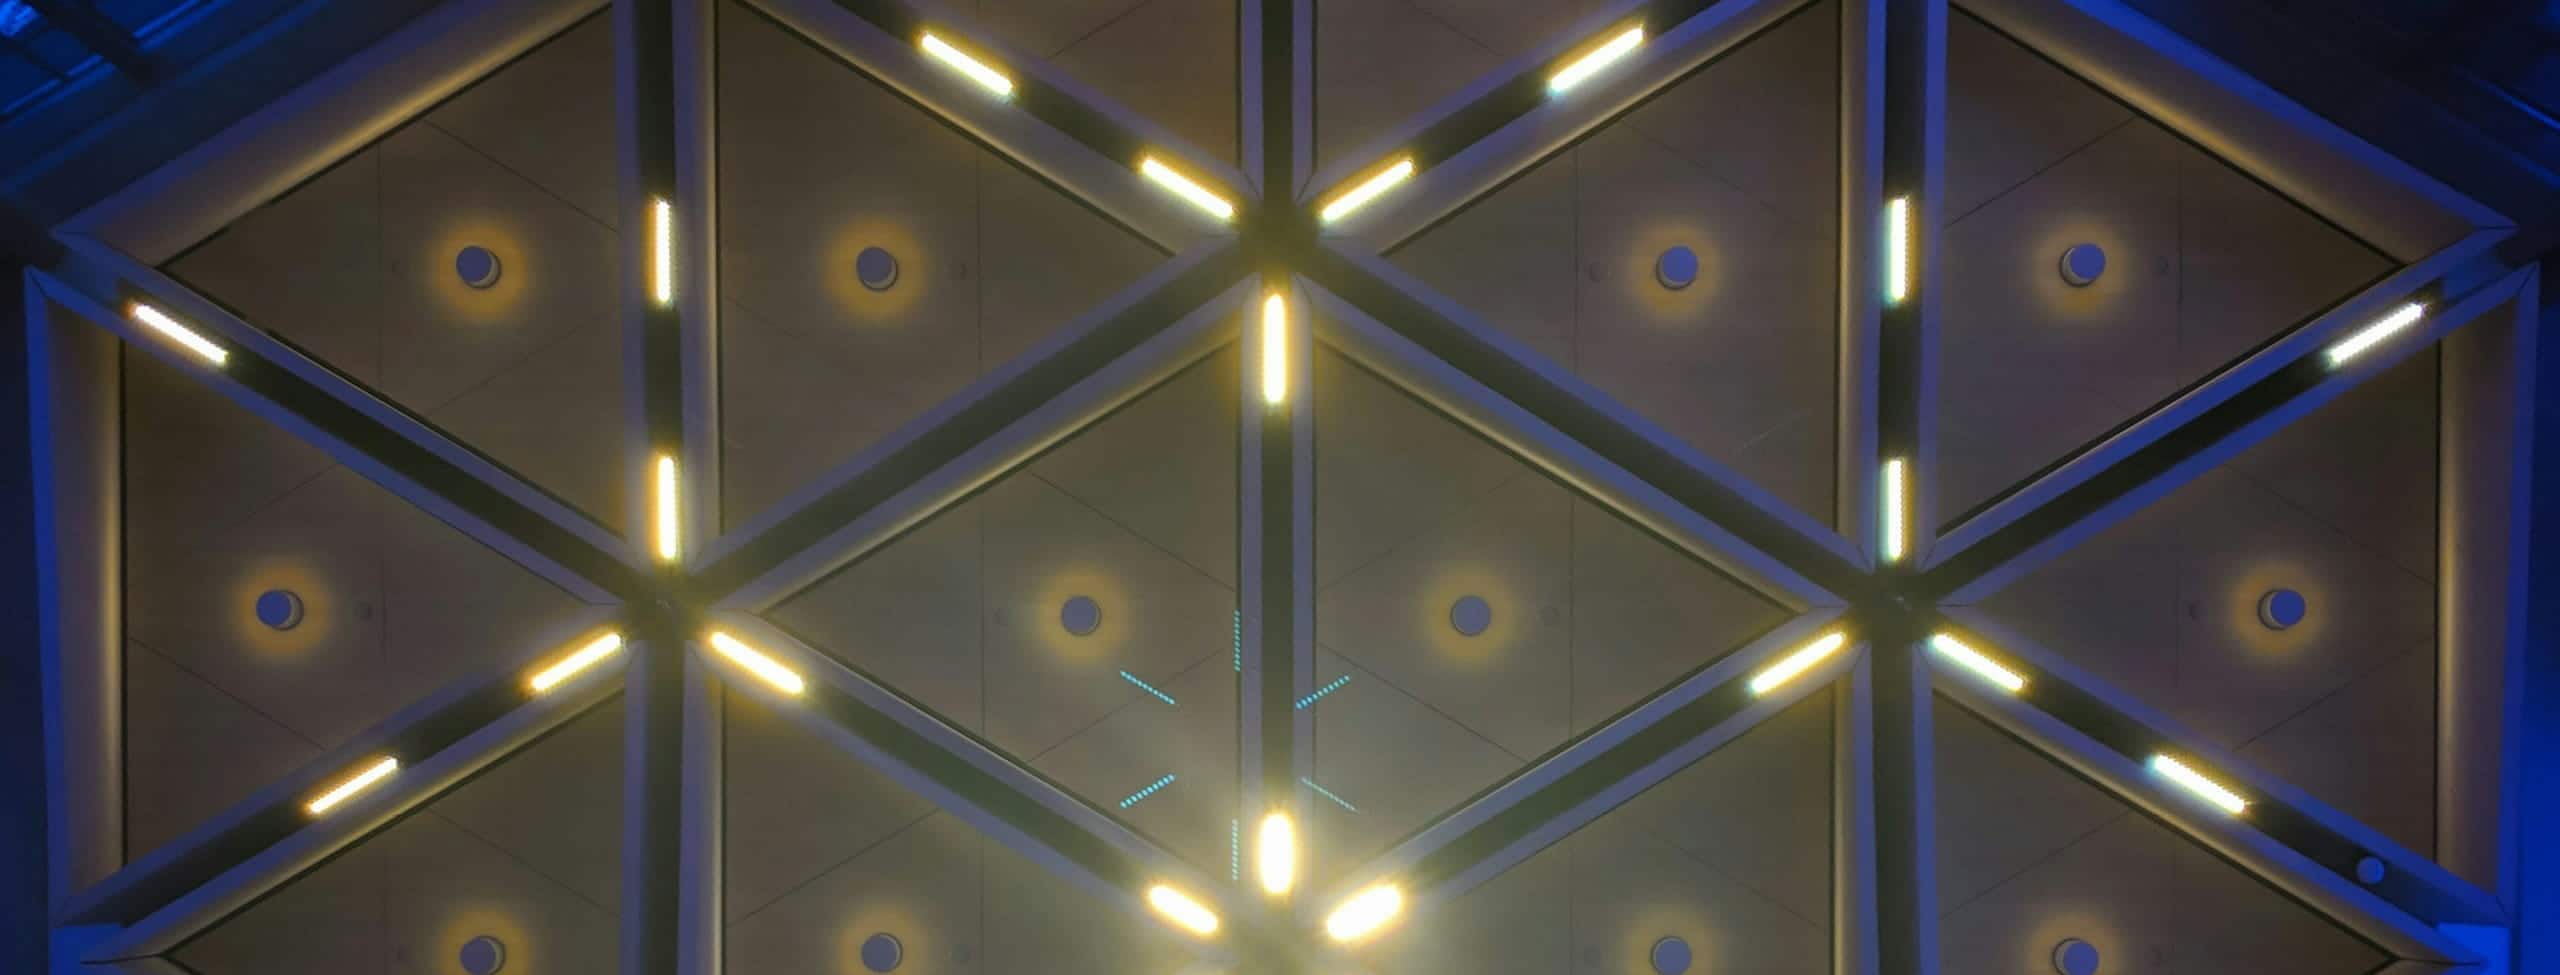 Abstract geometric lights